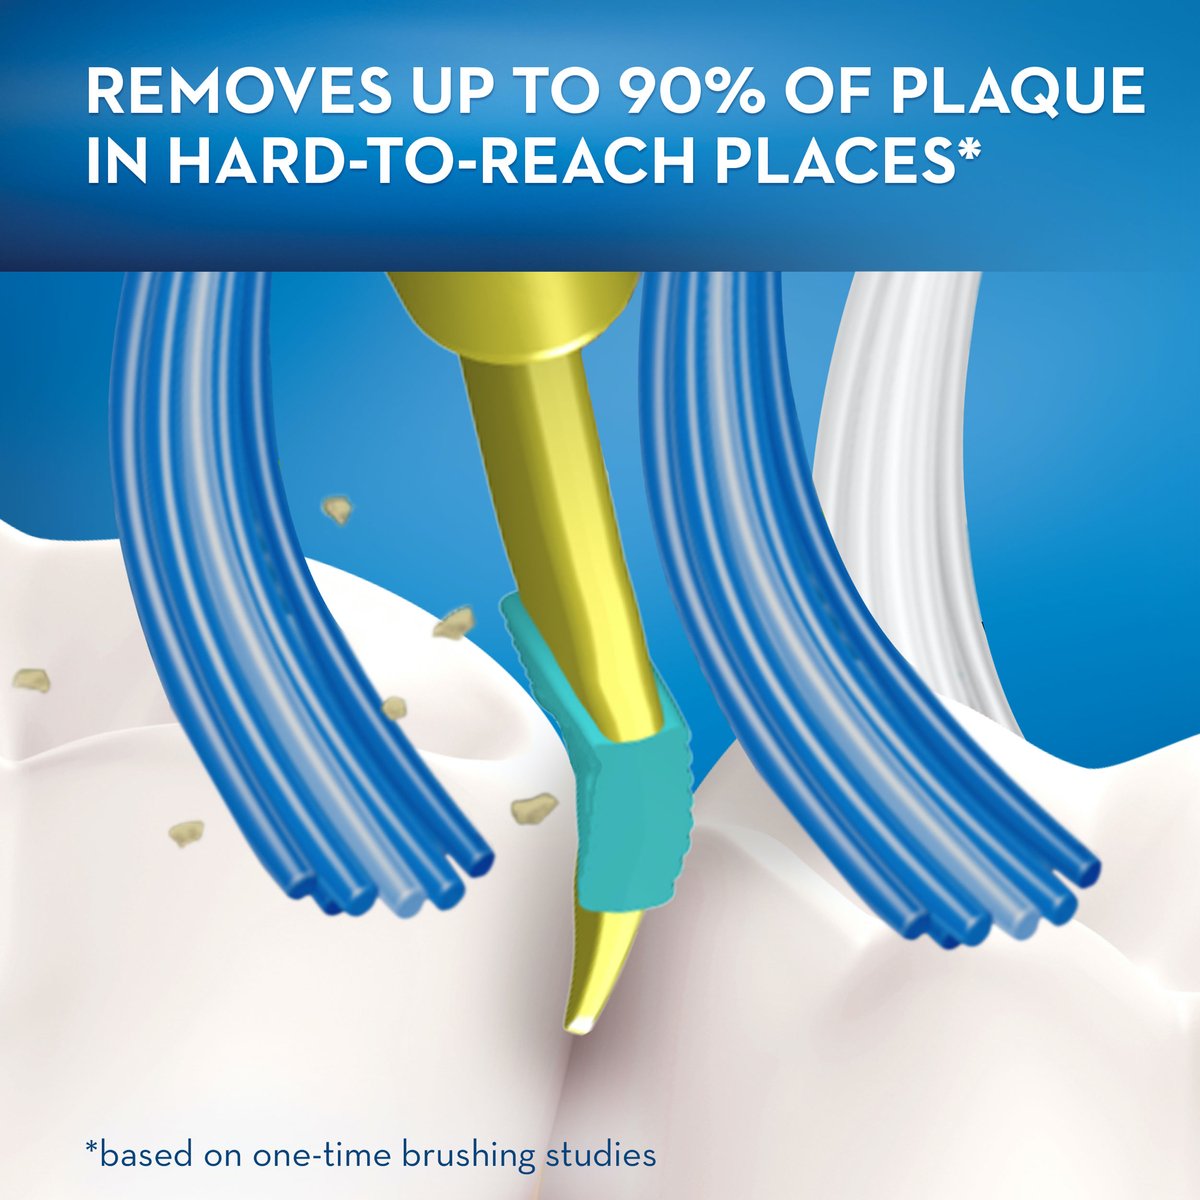 Oral B Pro-Expert Pulsar Toothbrush Medium Multi Colour Assorted 1pc